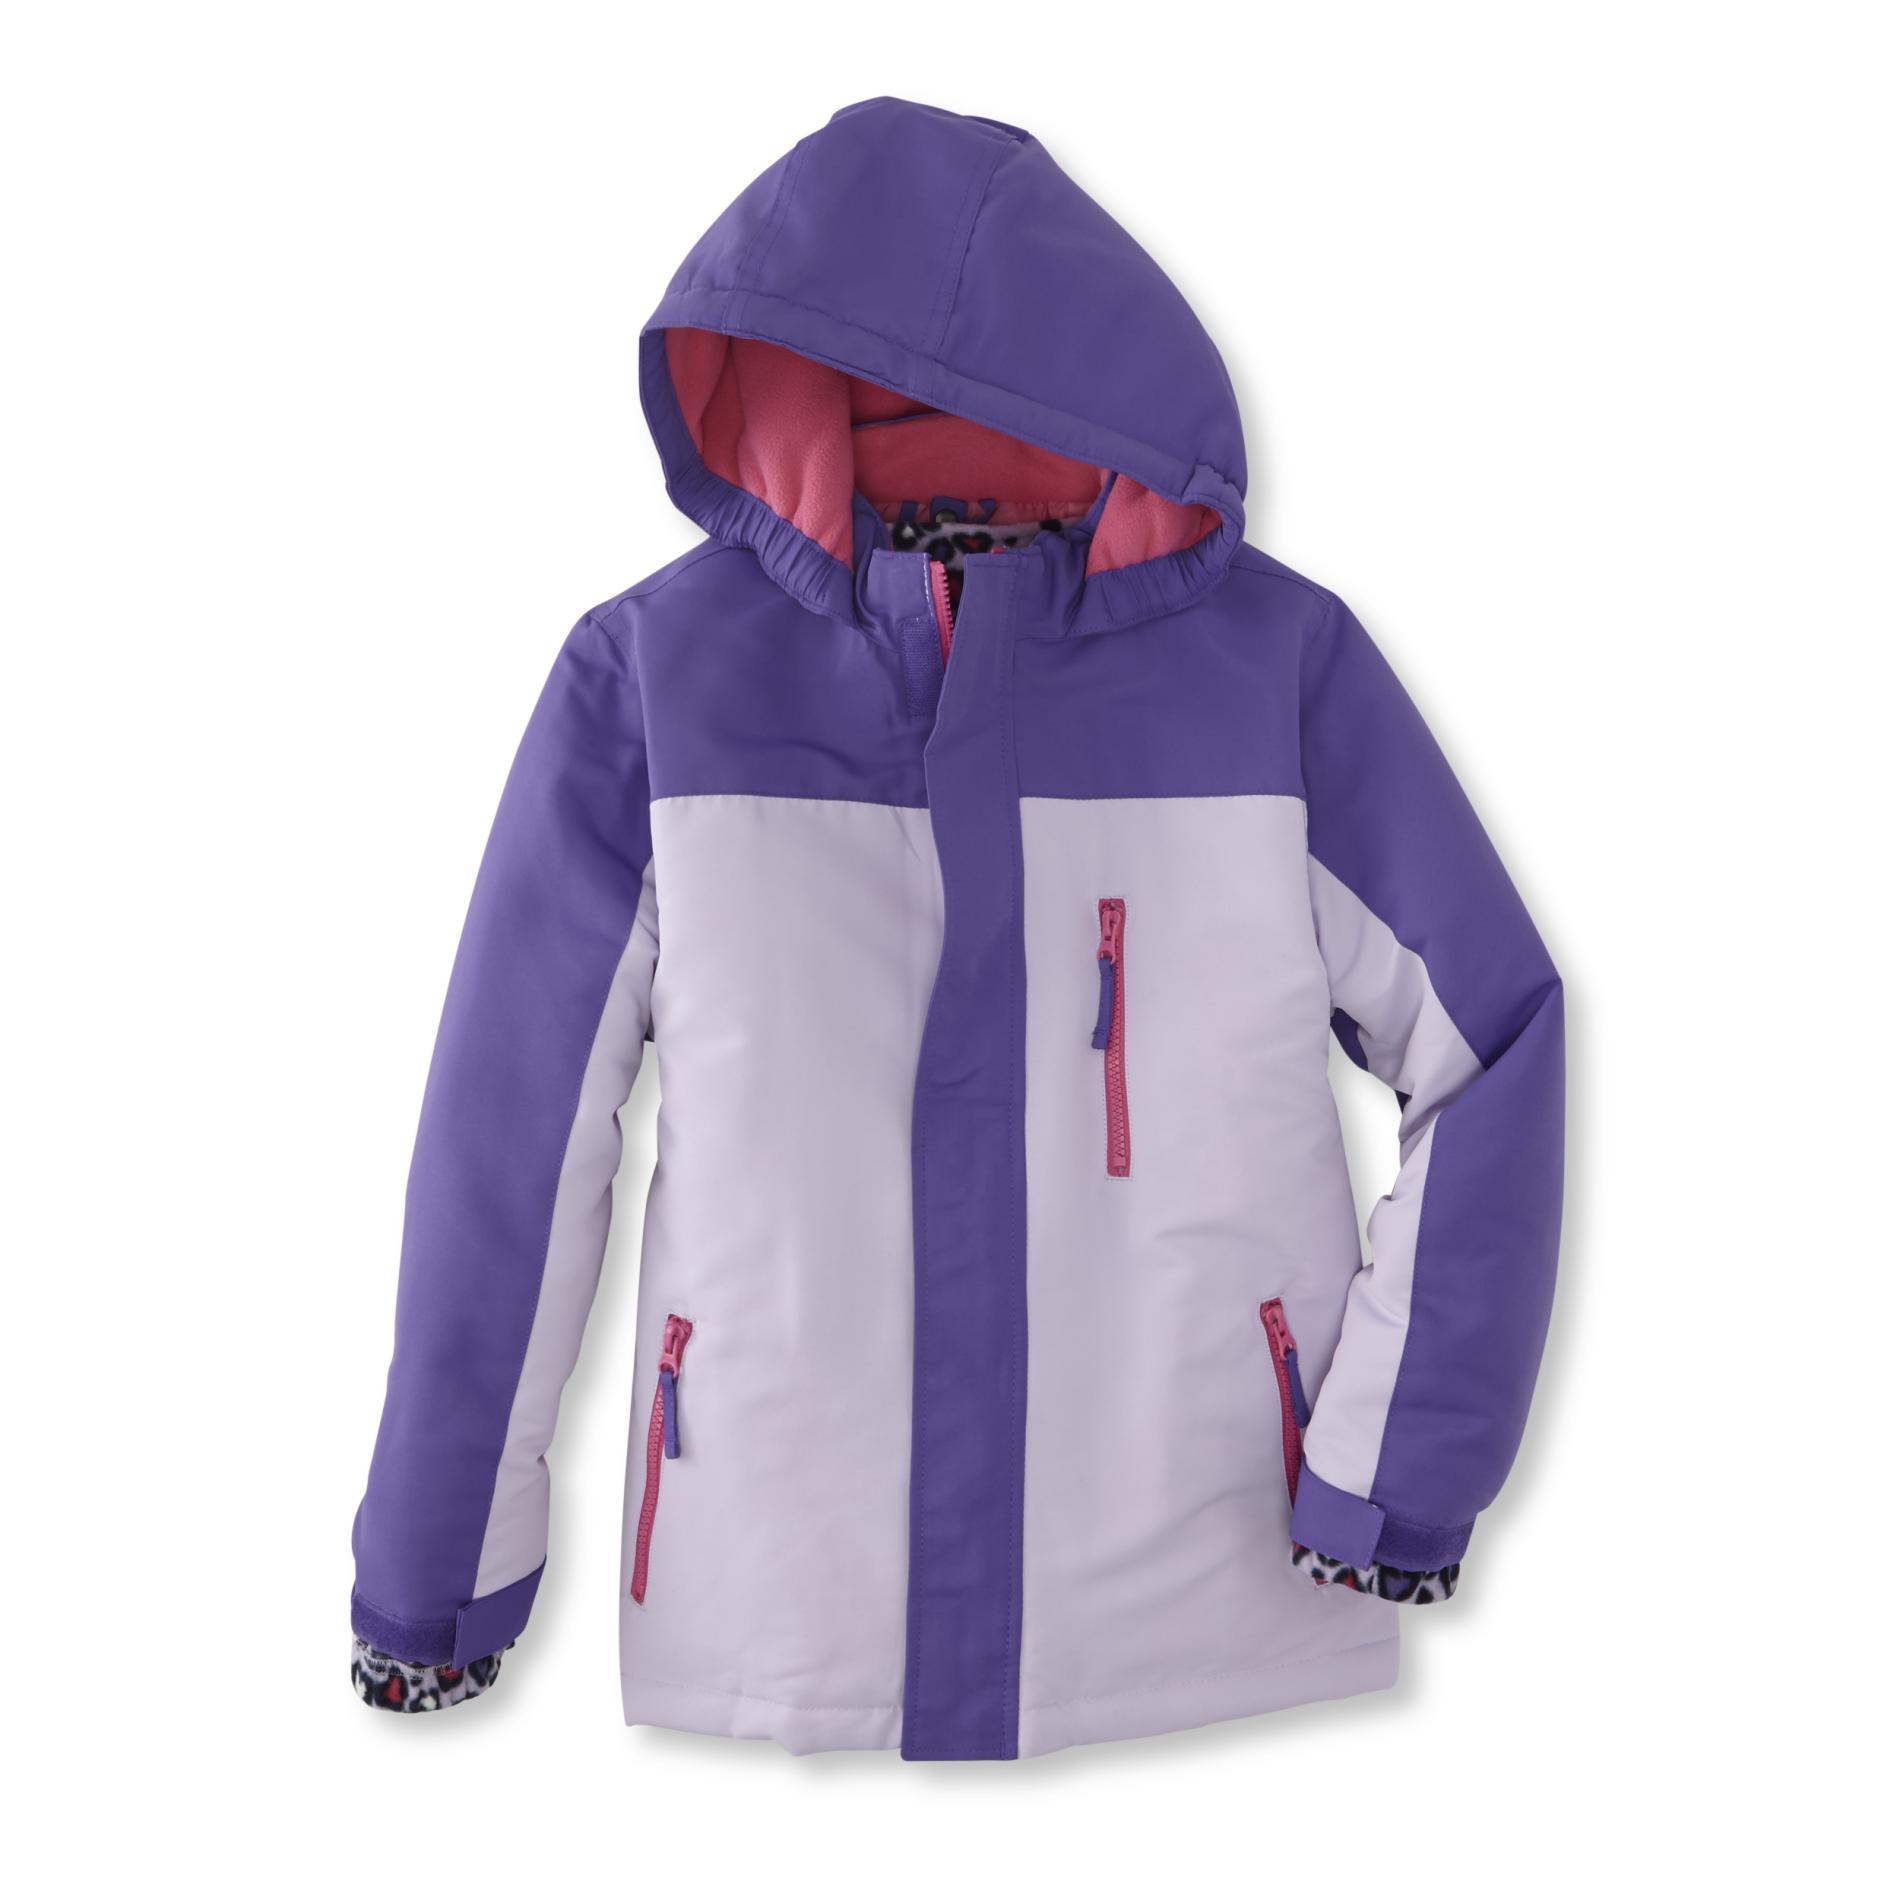 Basic Editions Girls' Winter Coat & Removable Liner Jacket - Leopard Print